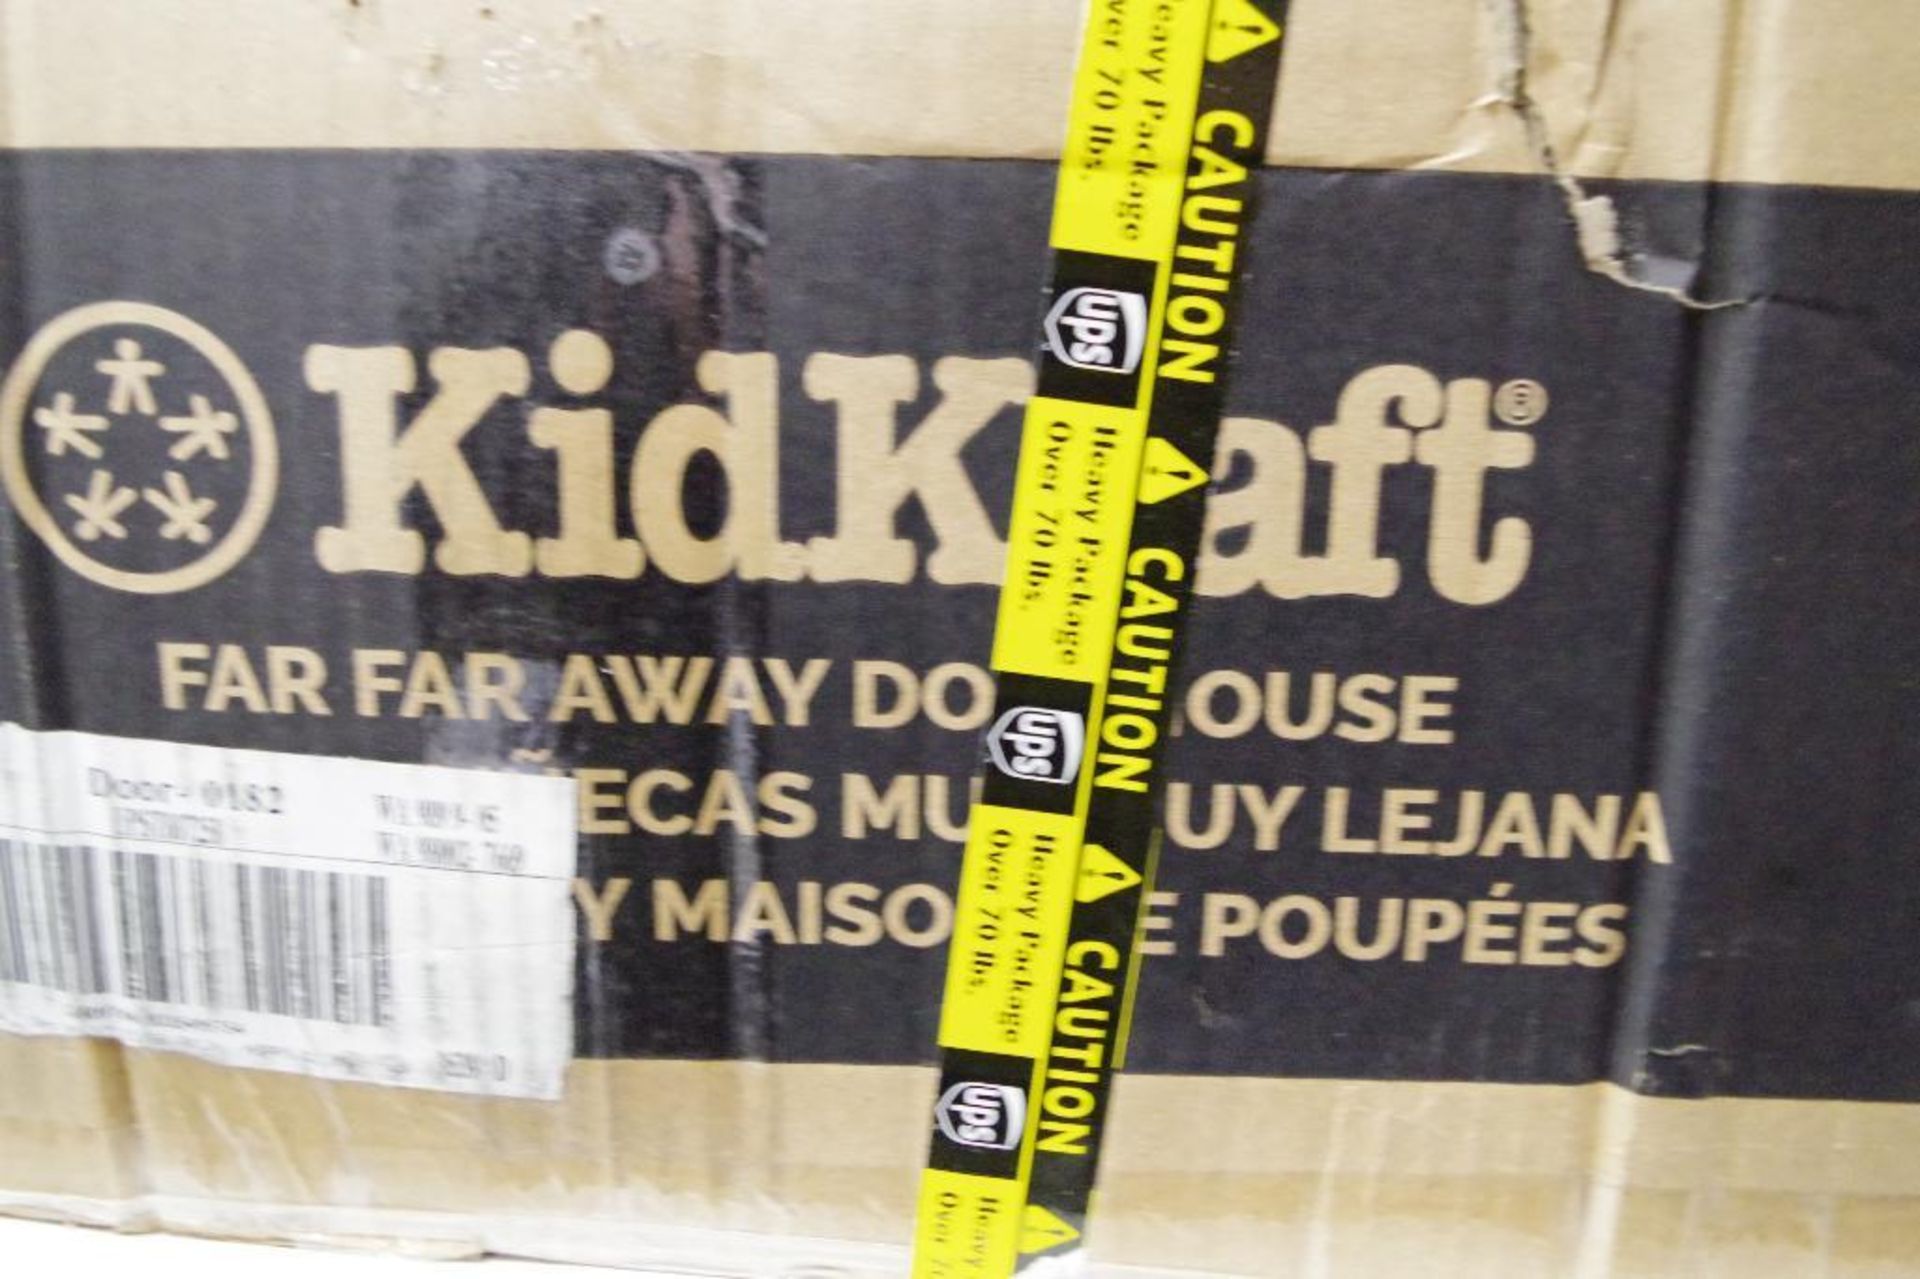 KidKRAFT Far Far Away Doolhouse (see description) - Image 3 of 3